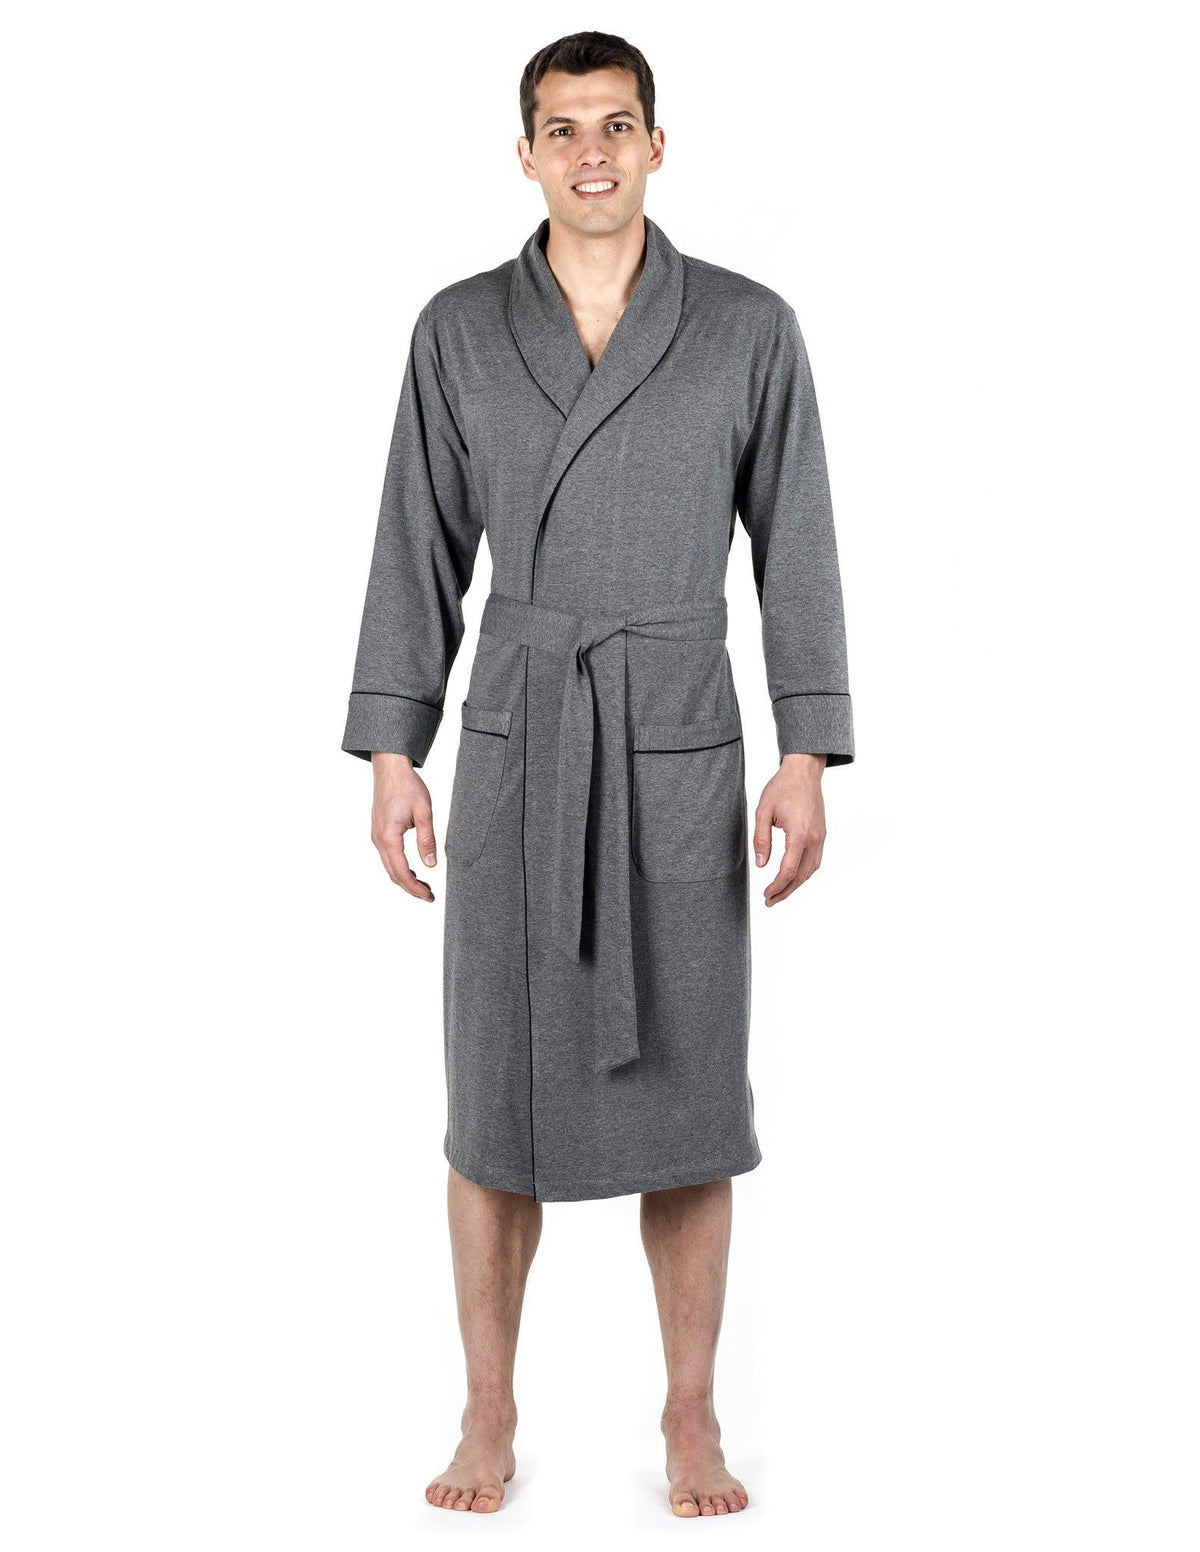 Men's Premium Knit Jersey Robe - Charcoal